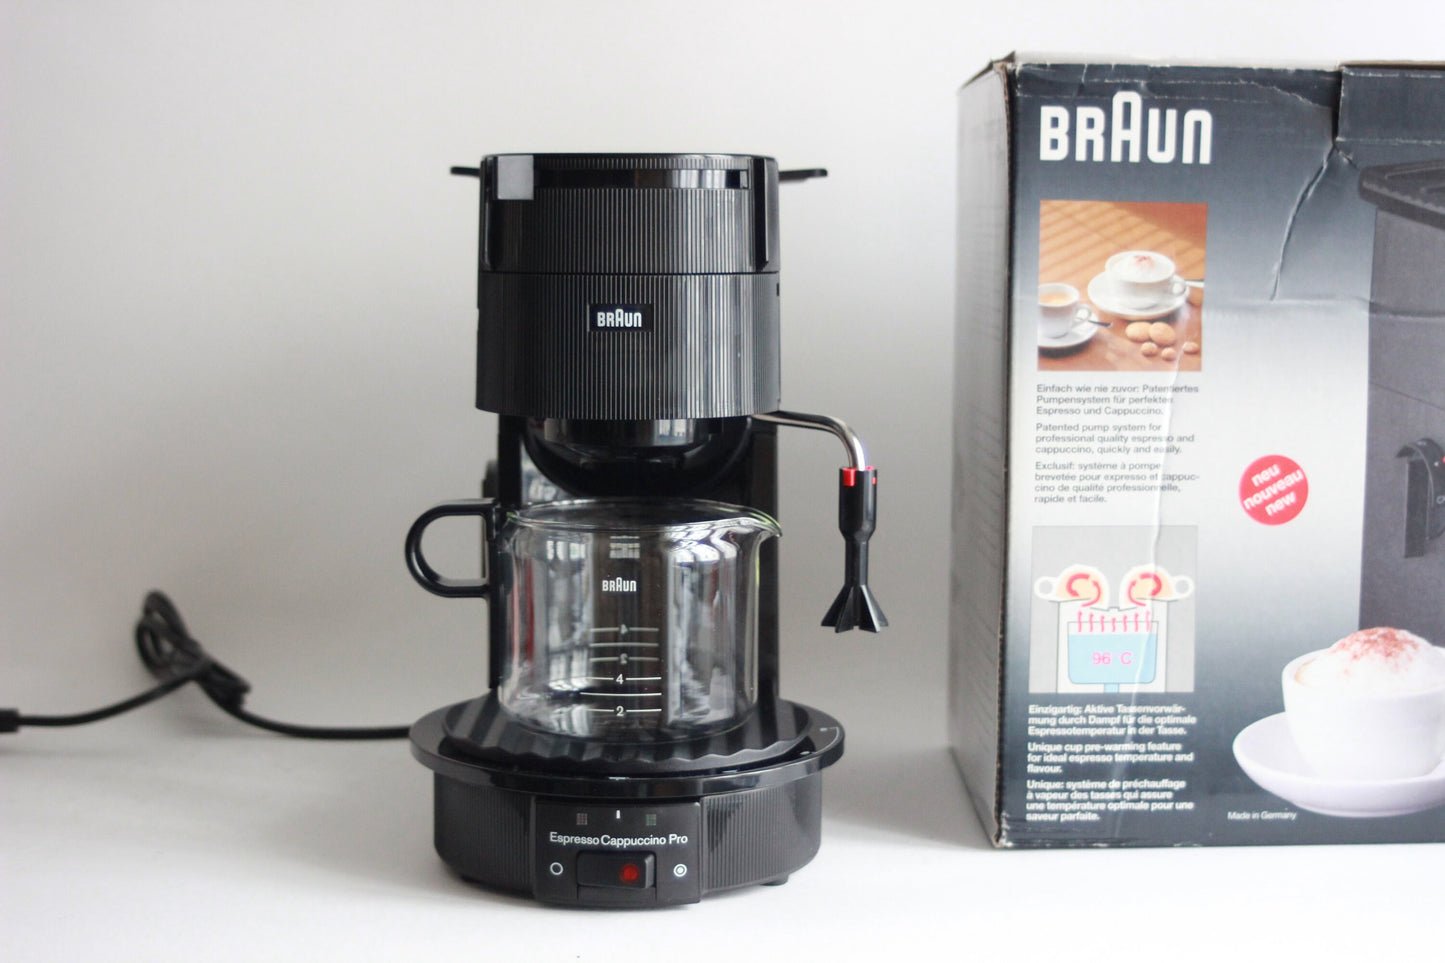 BRAUN Espresso Cappuccino Pro E300. Ludwig Littmann, Germany 1994.